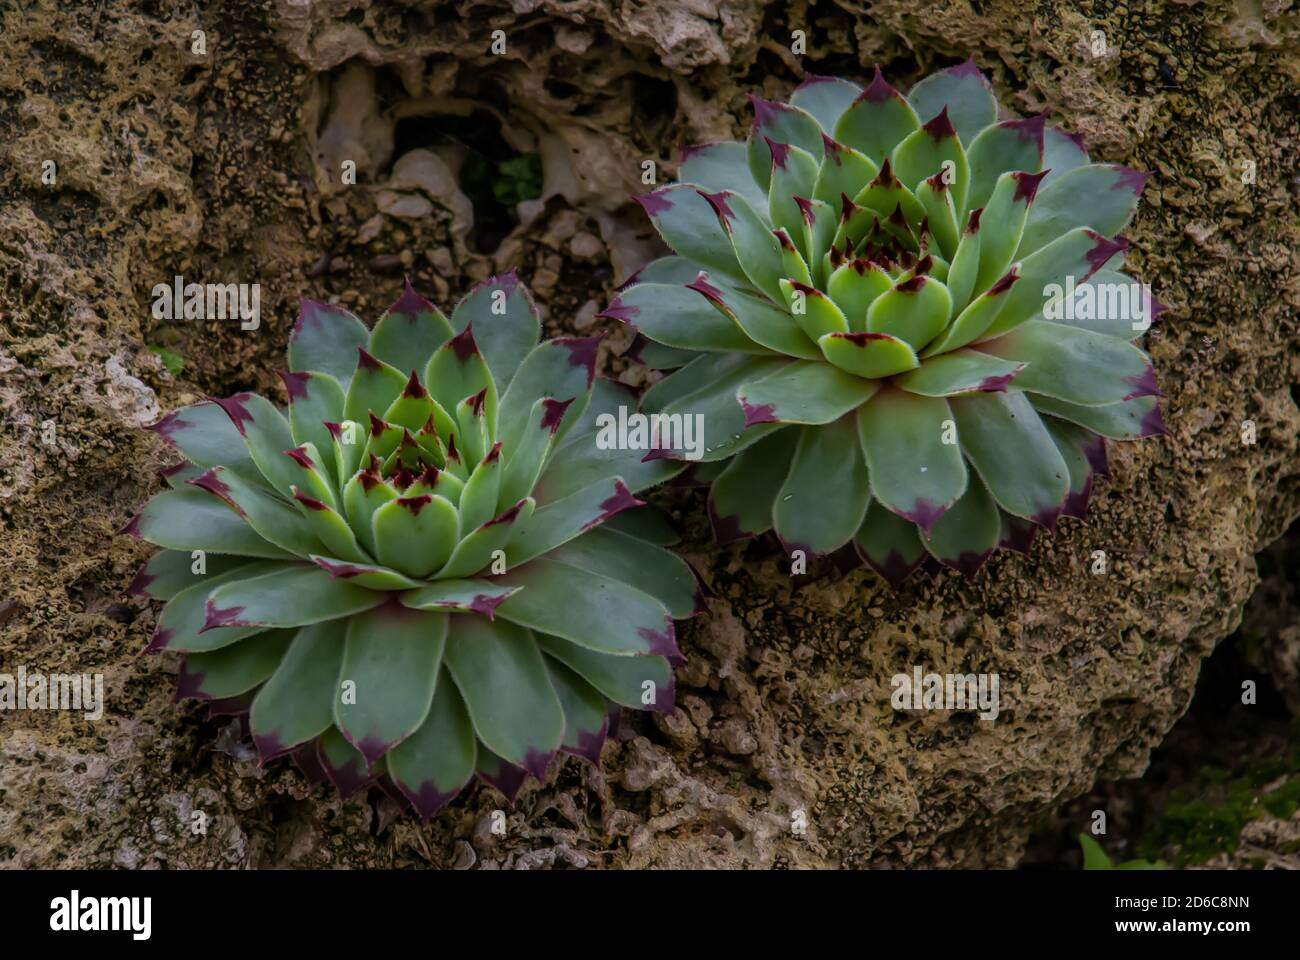 Sempervivum tectorum, Common Houseleek, Perennial plant growing in a botanic garden. No focus, specifically. Stock Photo